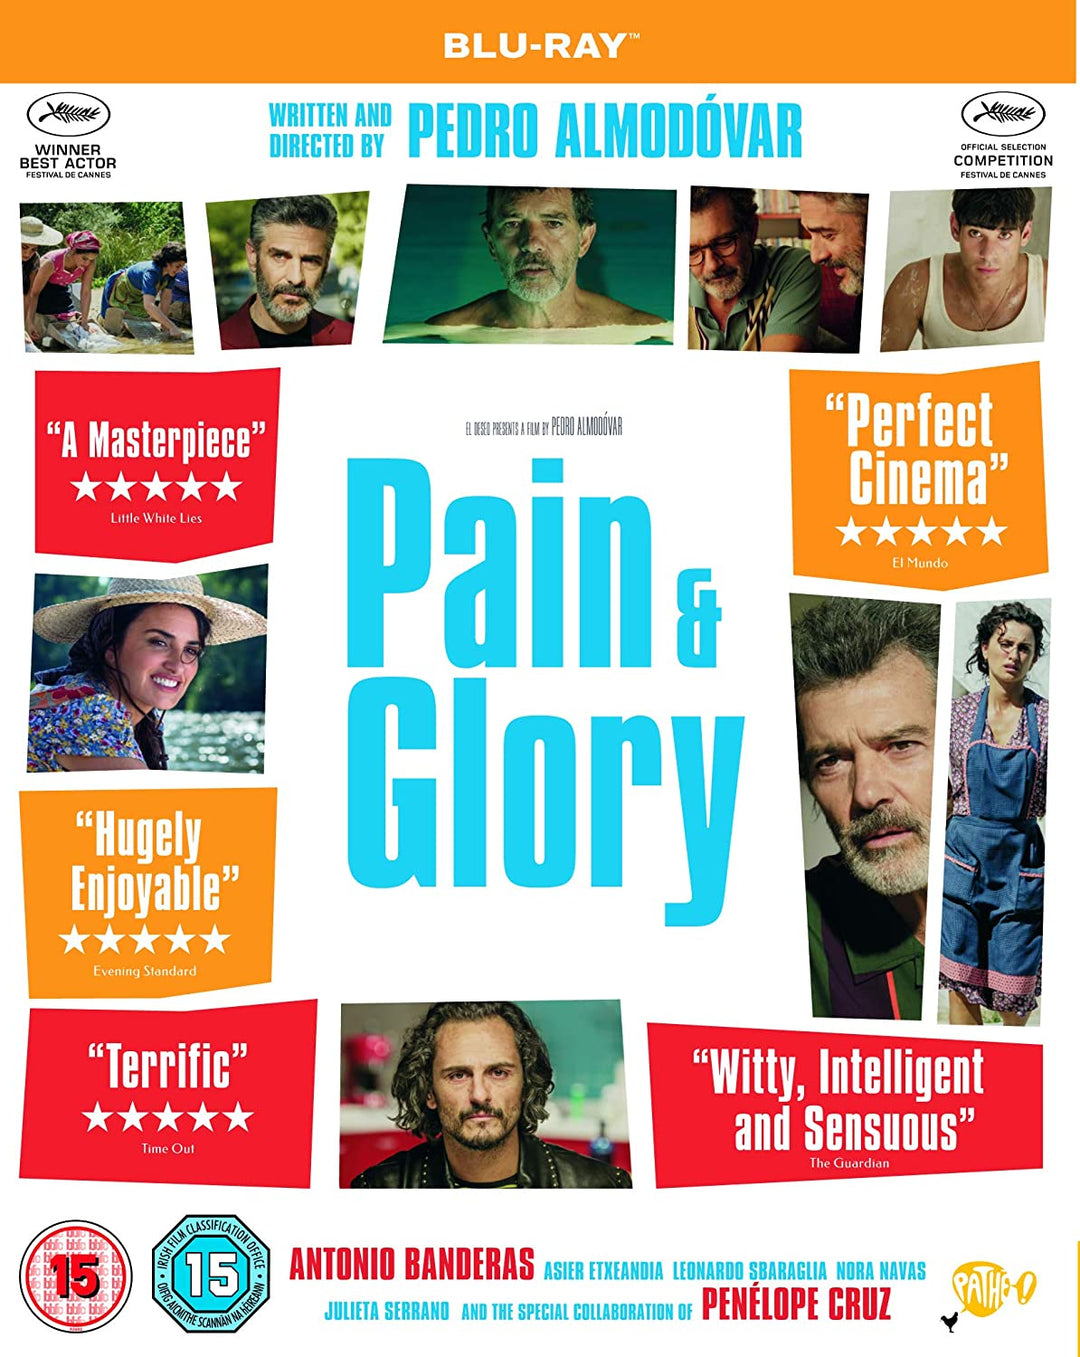 Pain & Glory BD [2019] -  Drama [DVD]